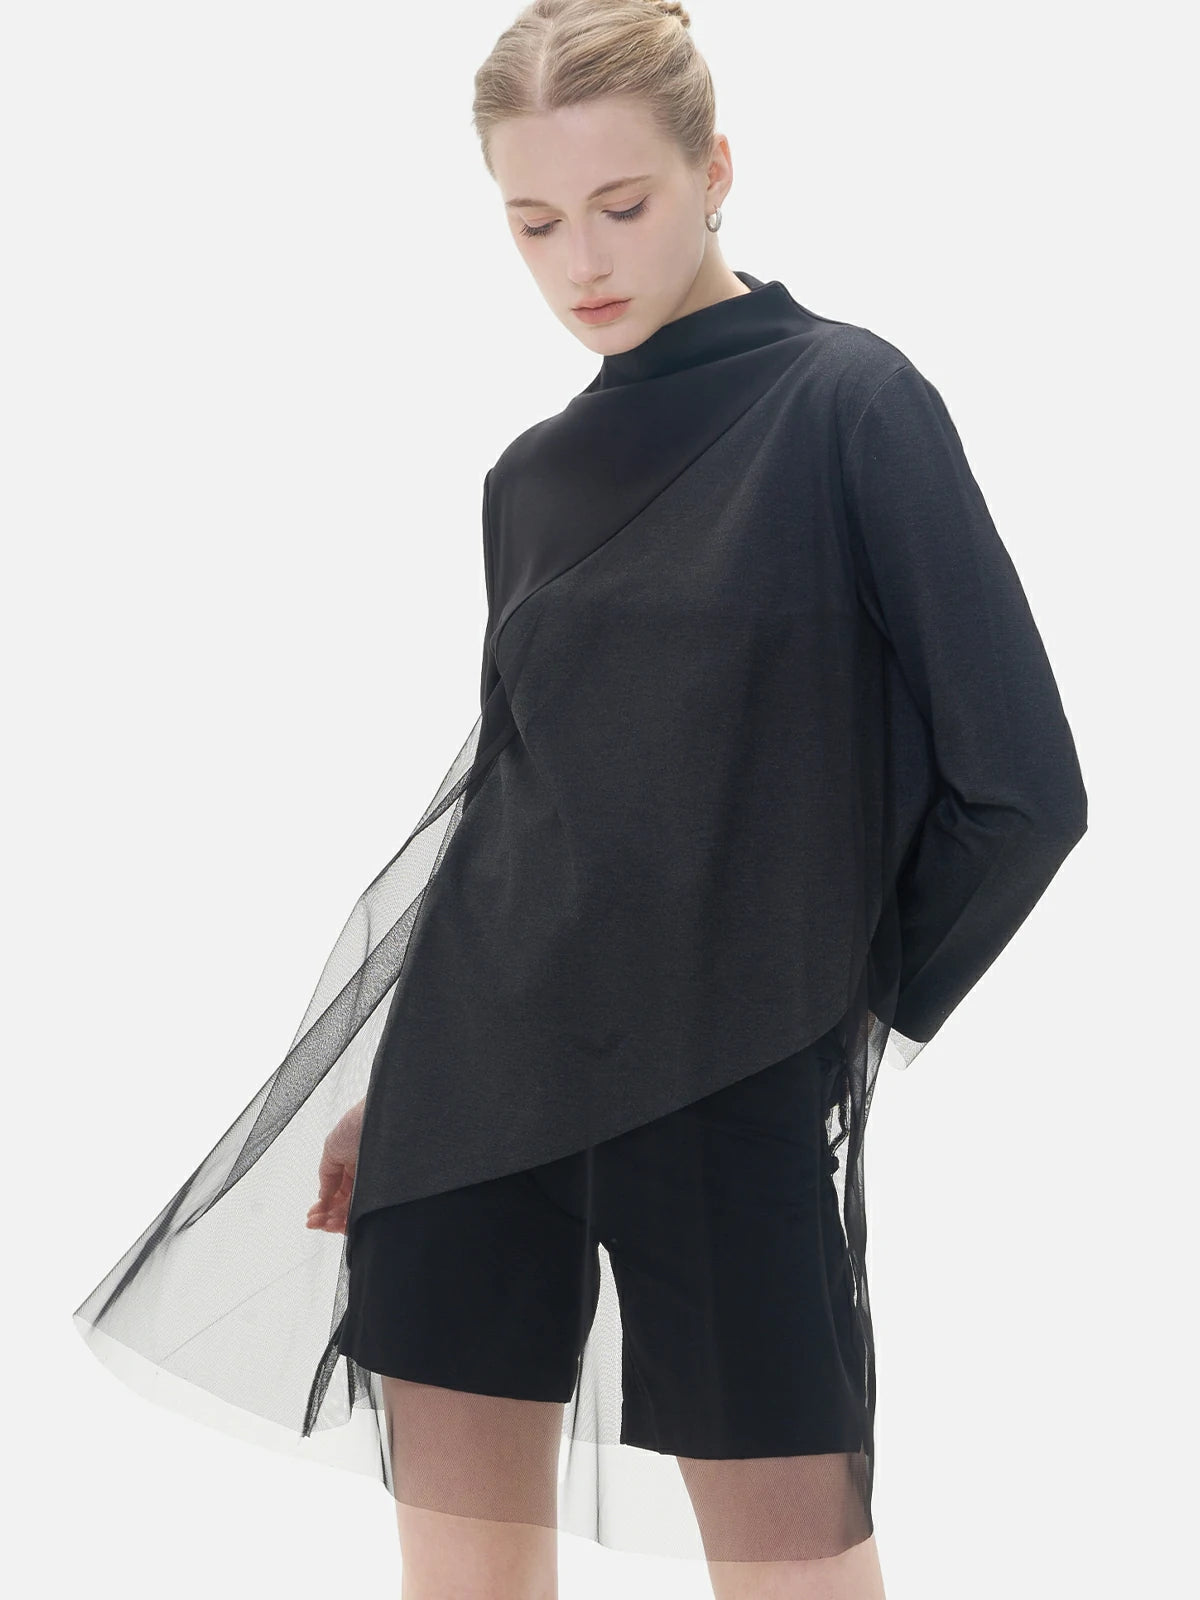 Irregular hem with mesh splice design, fashionable long women&#39;s top